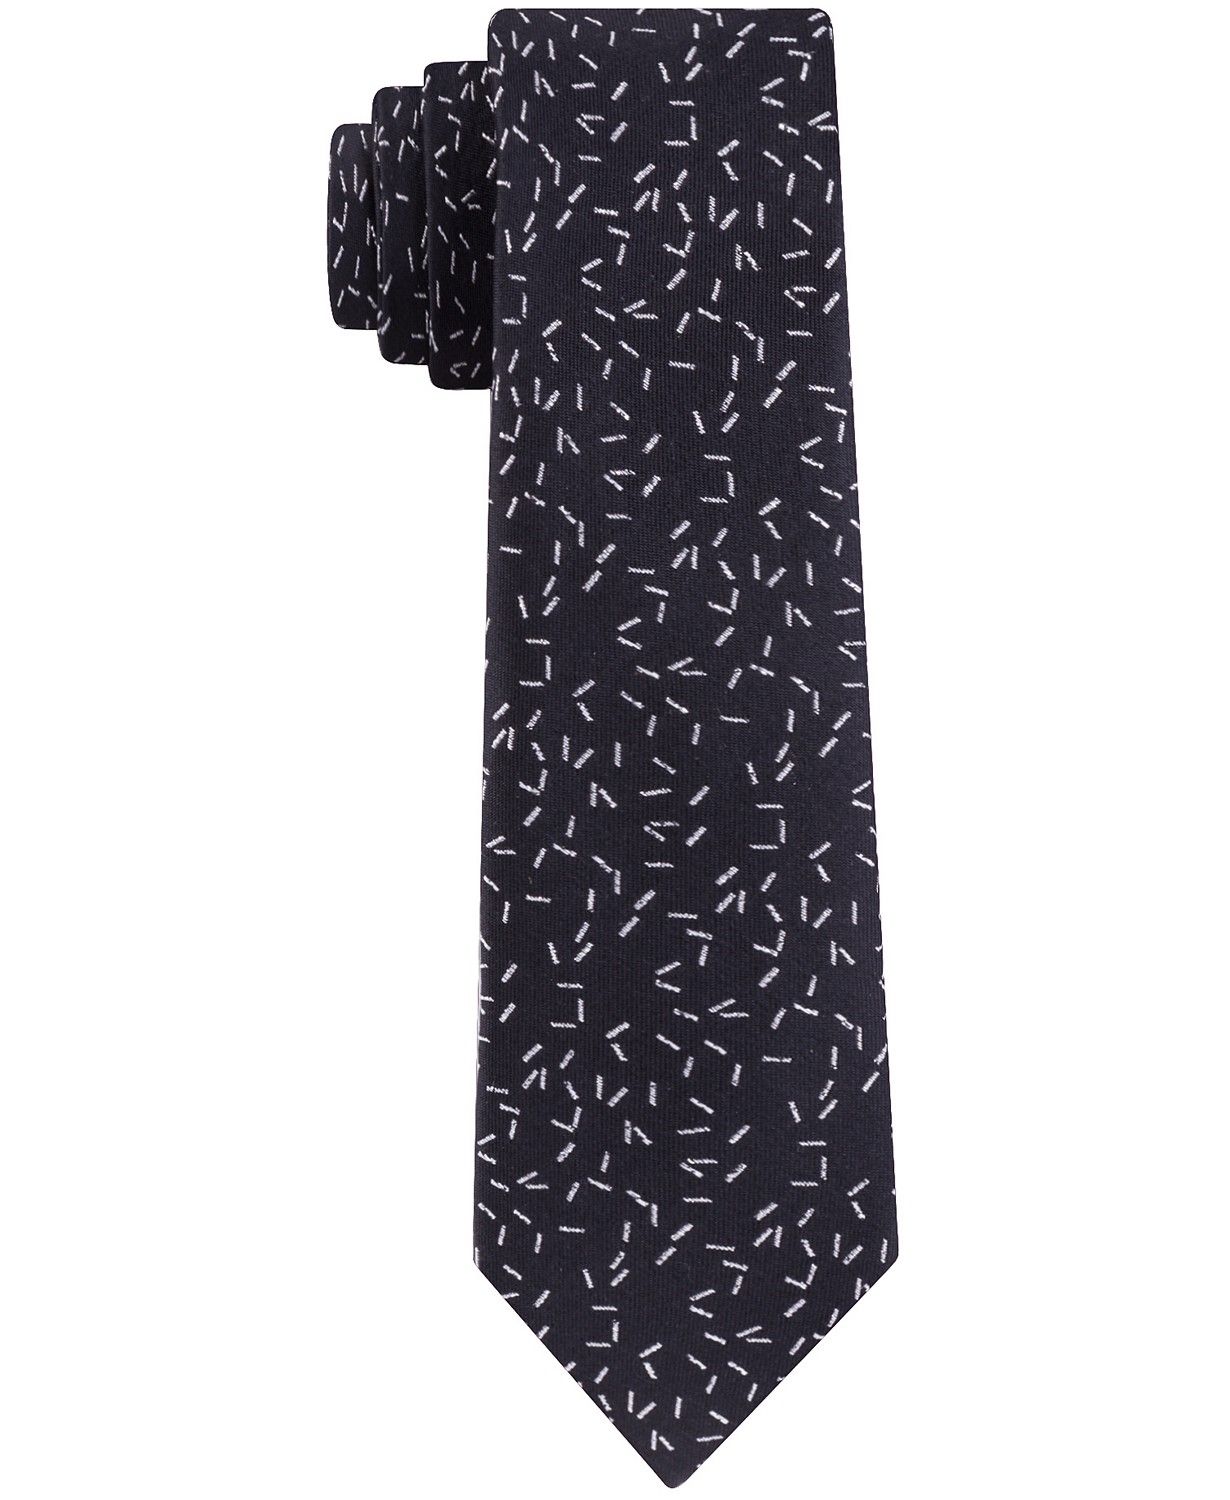 <br>Color: Blacks<br>Pattern: Novelty<br>Style: Neck Tie<br>Width: Skinny (Material: Silk